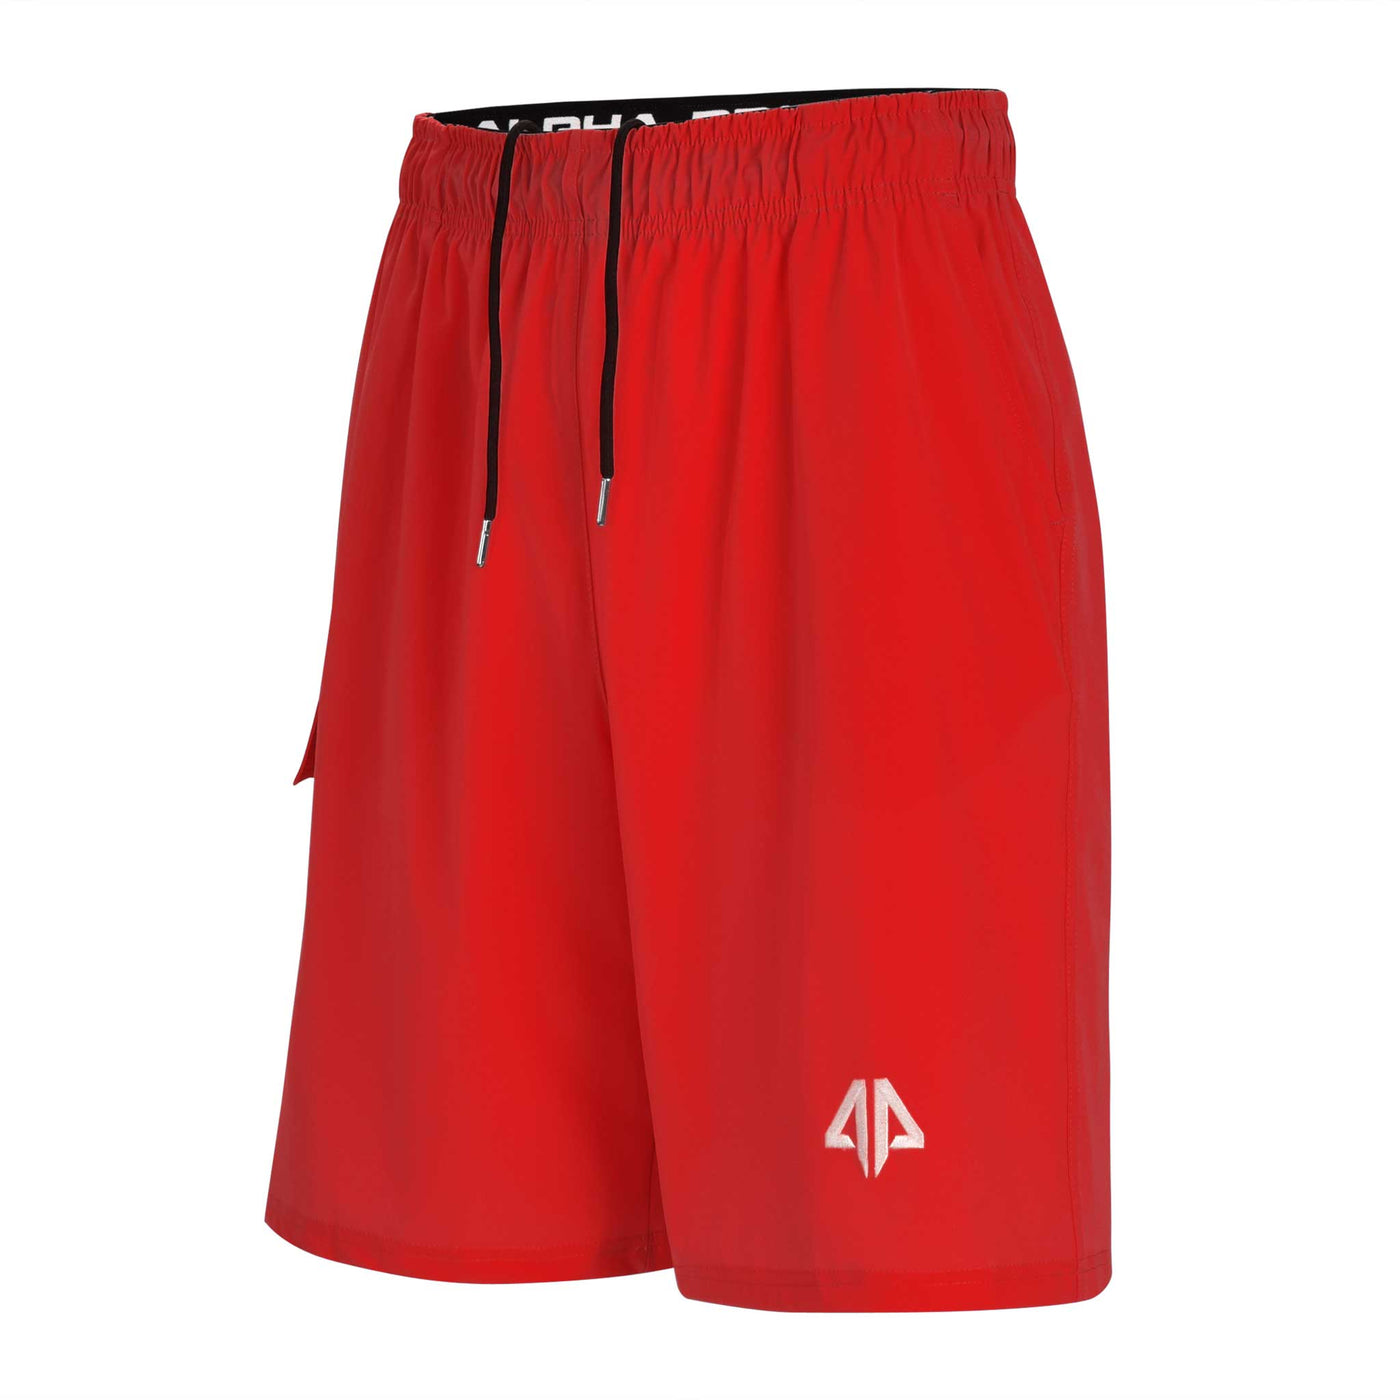 Alpha Prime Microfiber Shorts – Khaki - Alpha Prime Sports